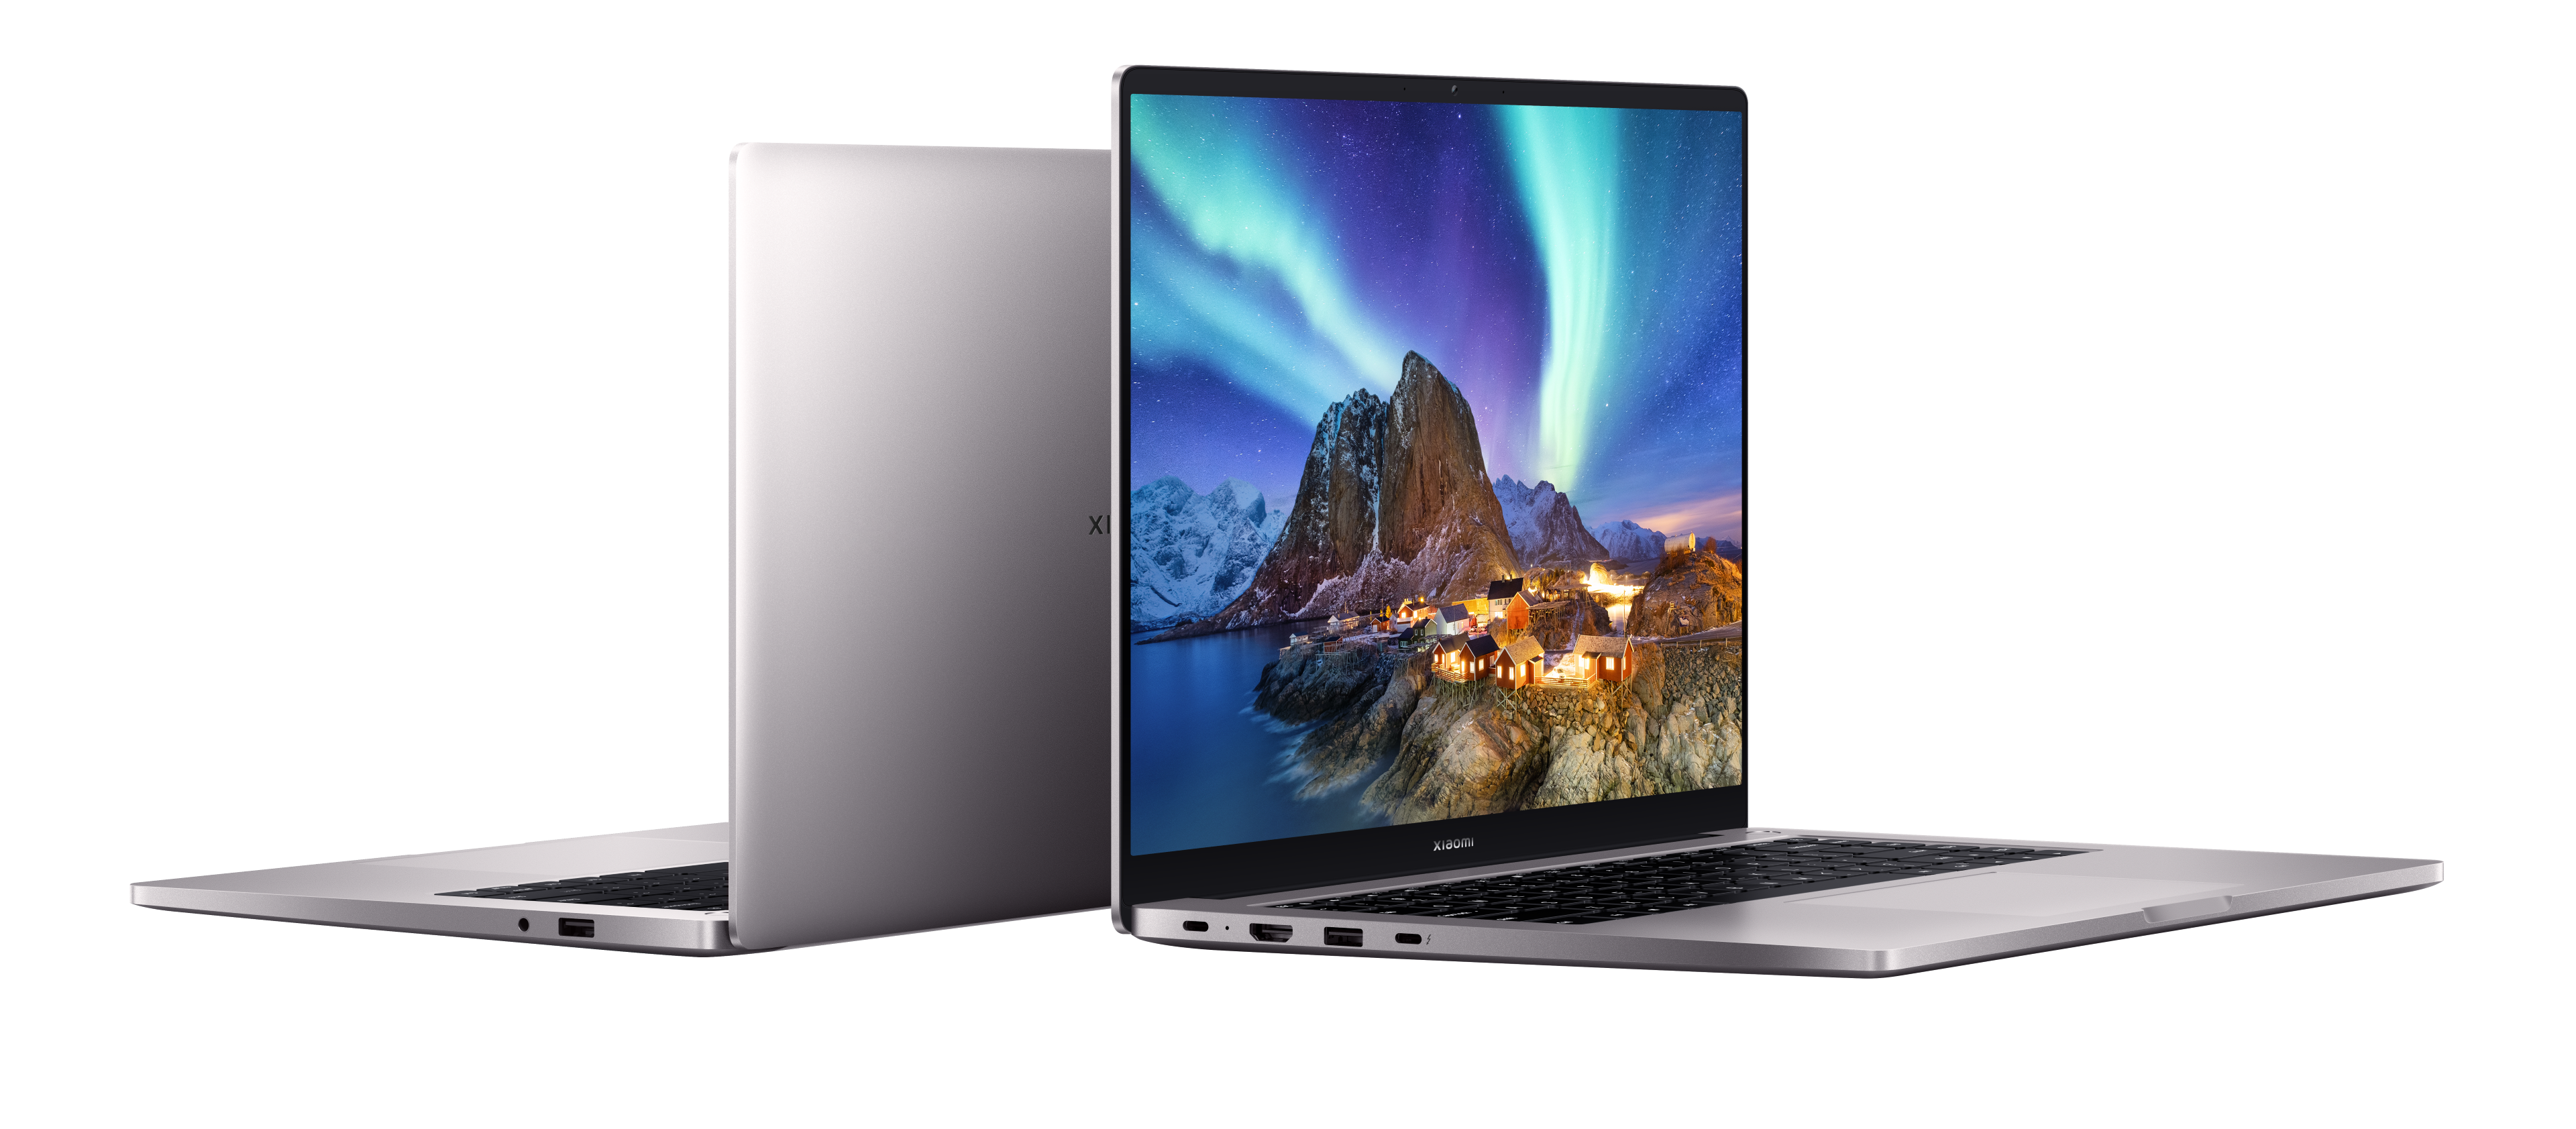 Xiaomi Mi Notebook Pro 2021, RedmiBook Pro 2021 get 'Enhanced